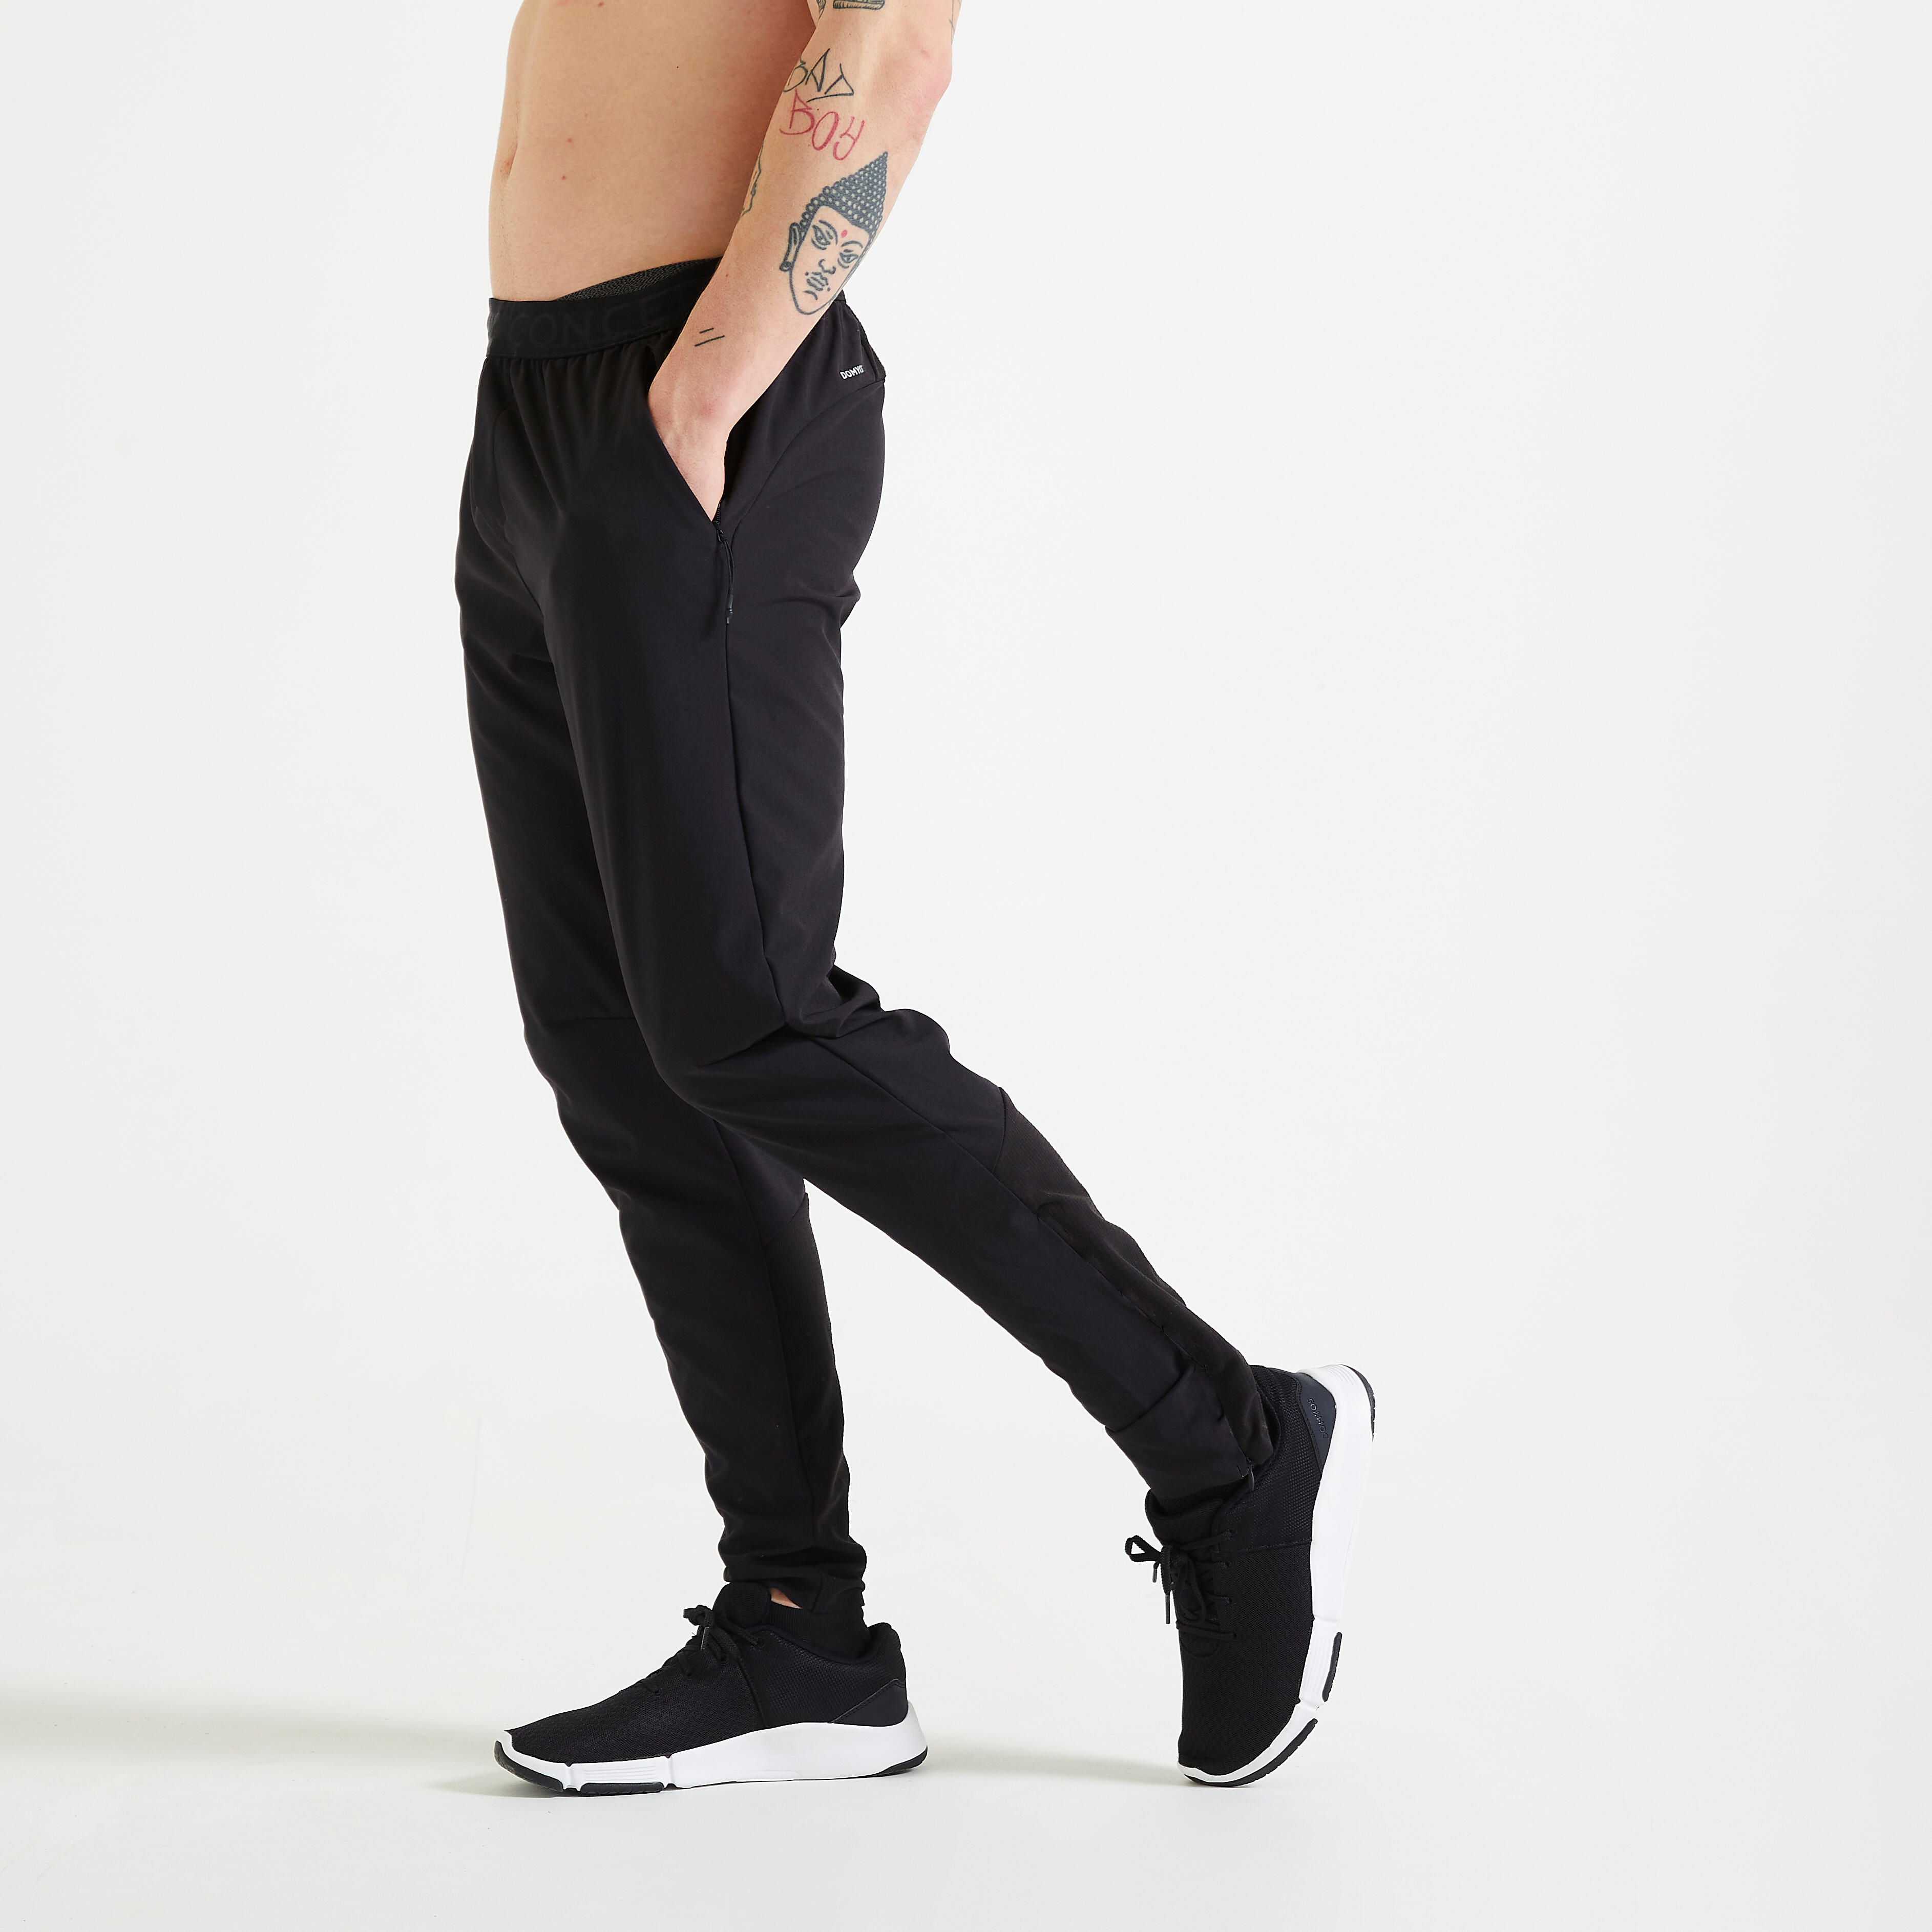 Solid Pants  Shop Best Solid Black Track Pants Online Now  VILAN APPARELS